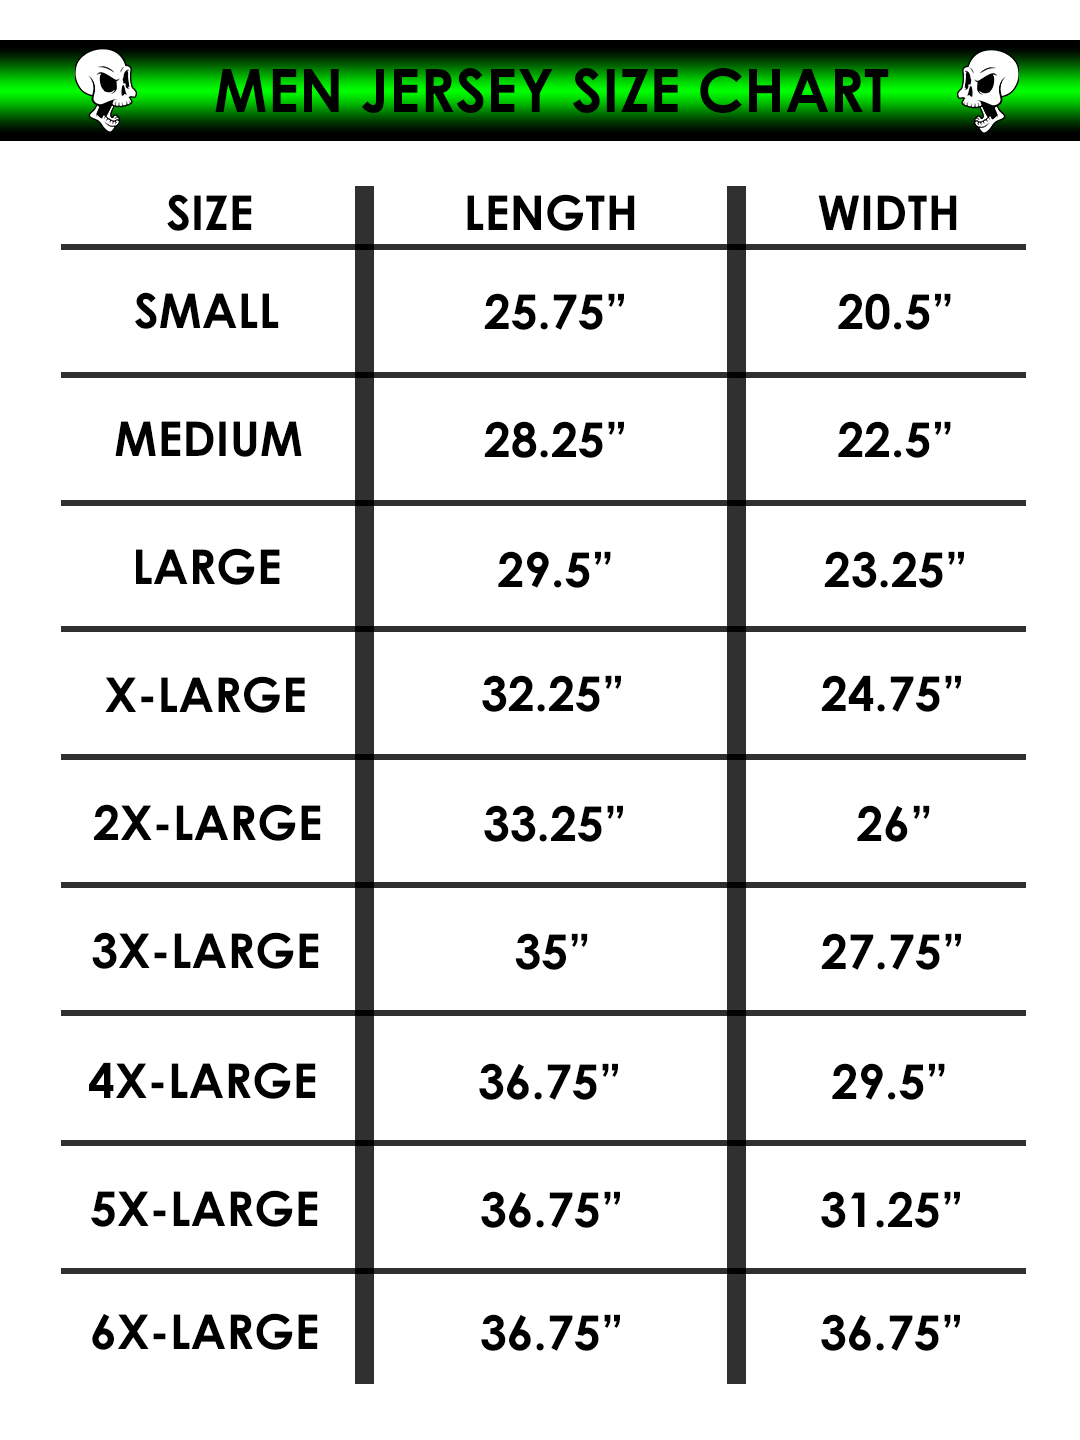 Custom Team Uniform Size Charts